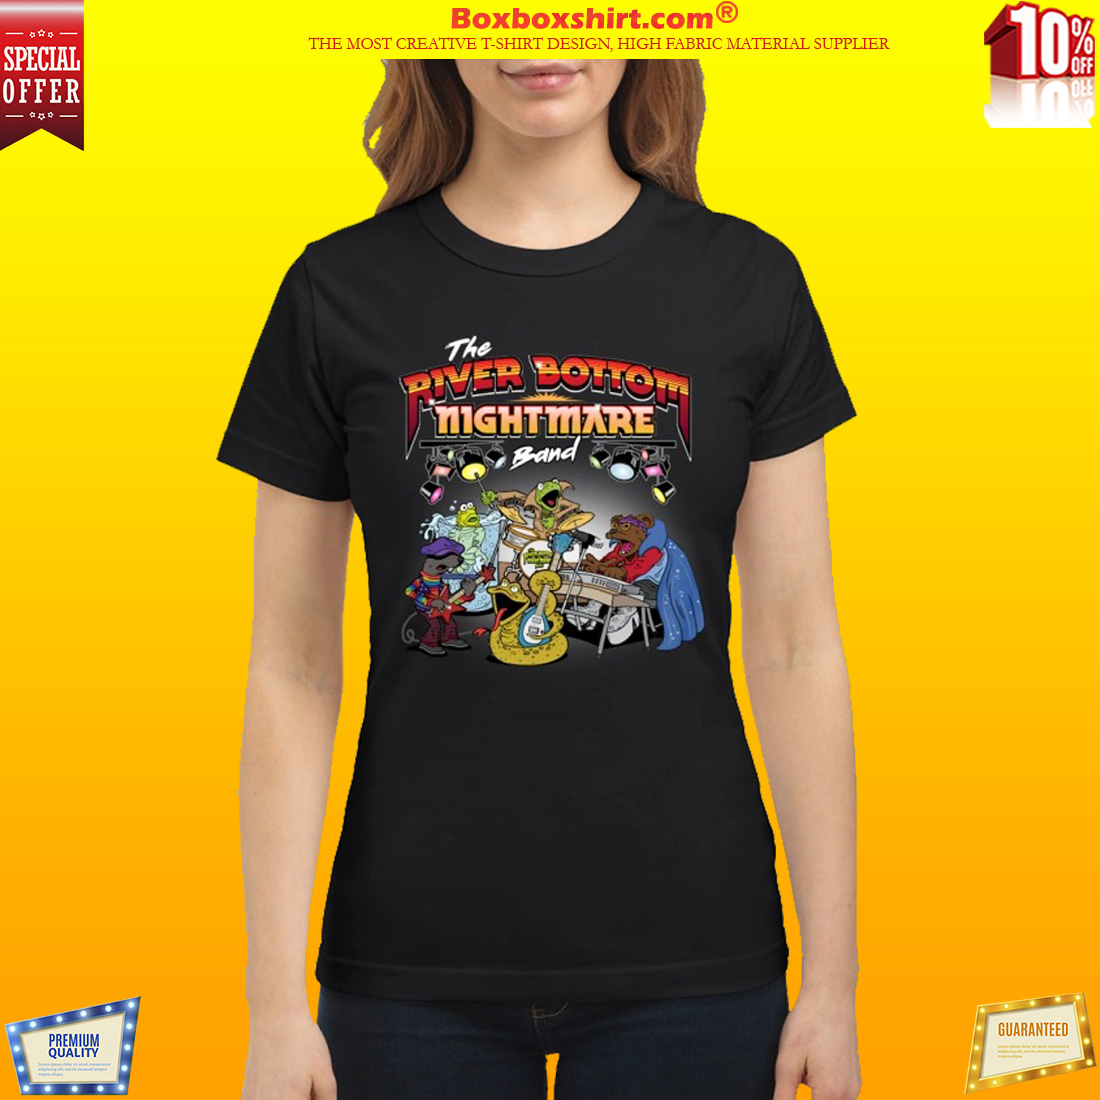 The riverbottom nightmare band shirt